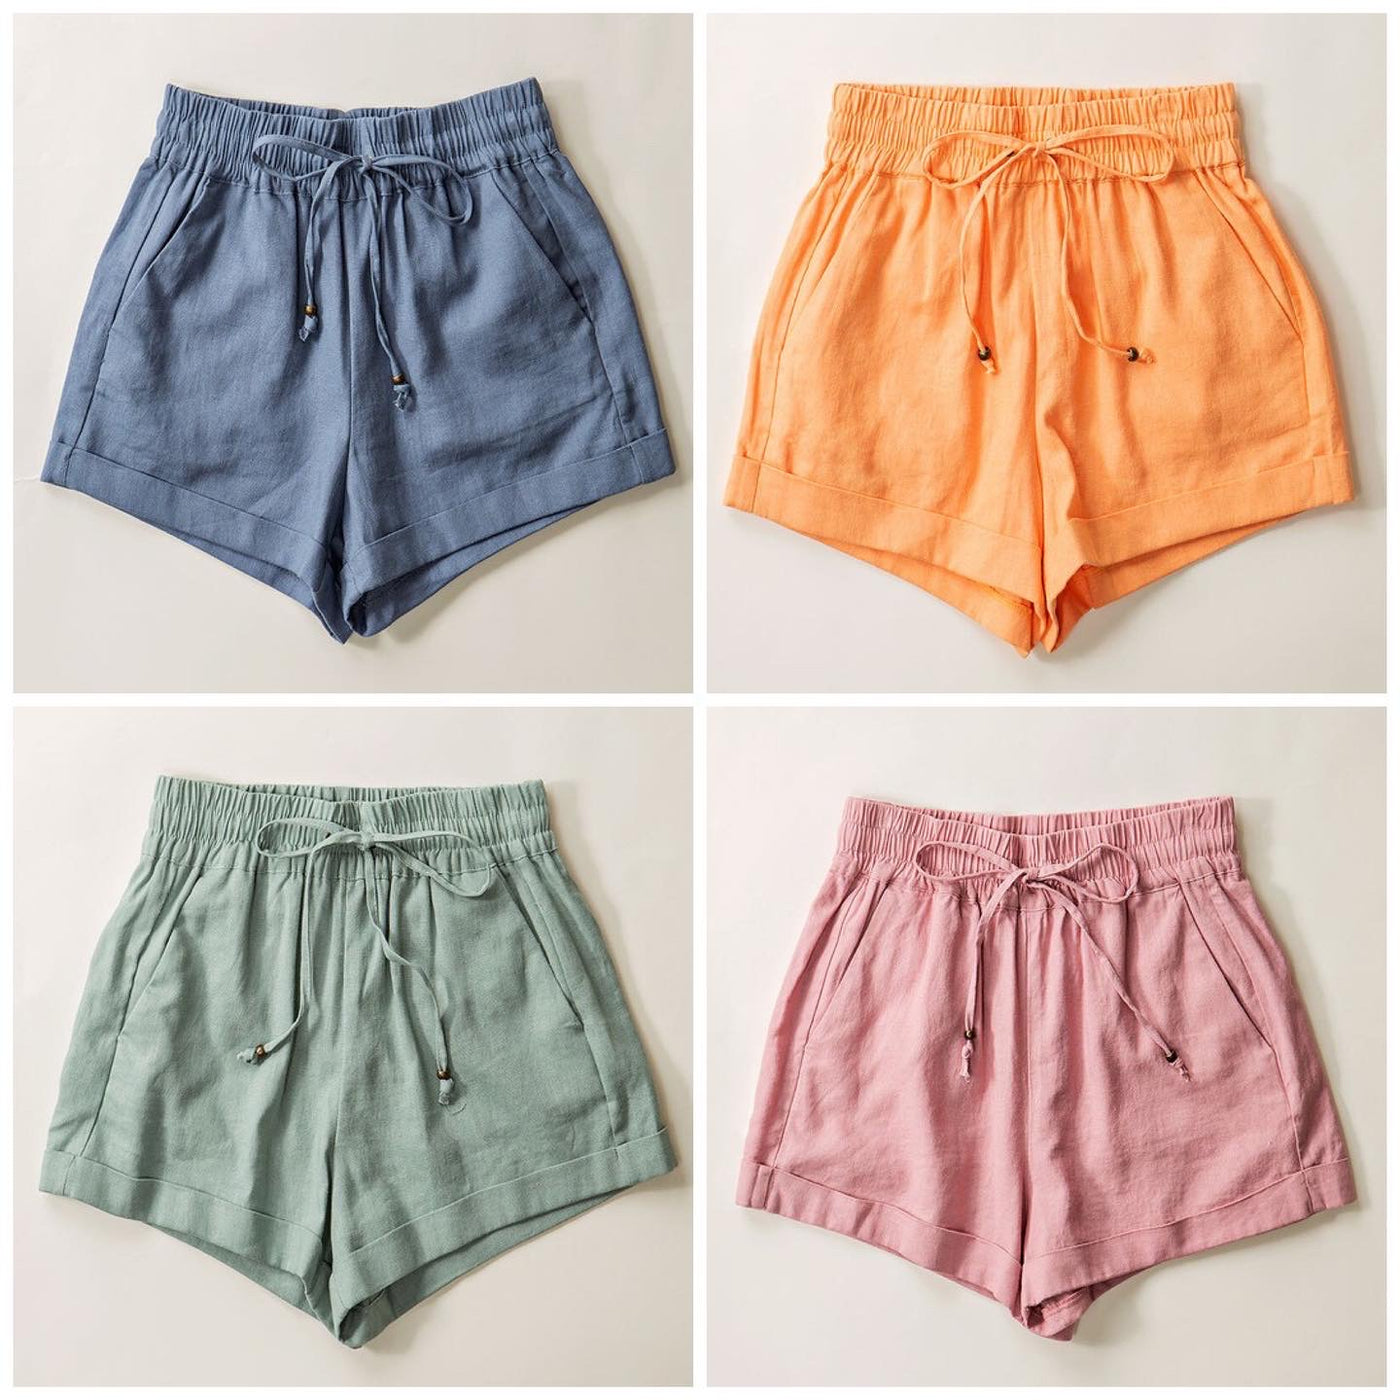 The Hazel Summer Shorts